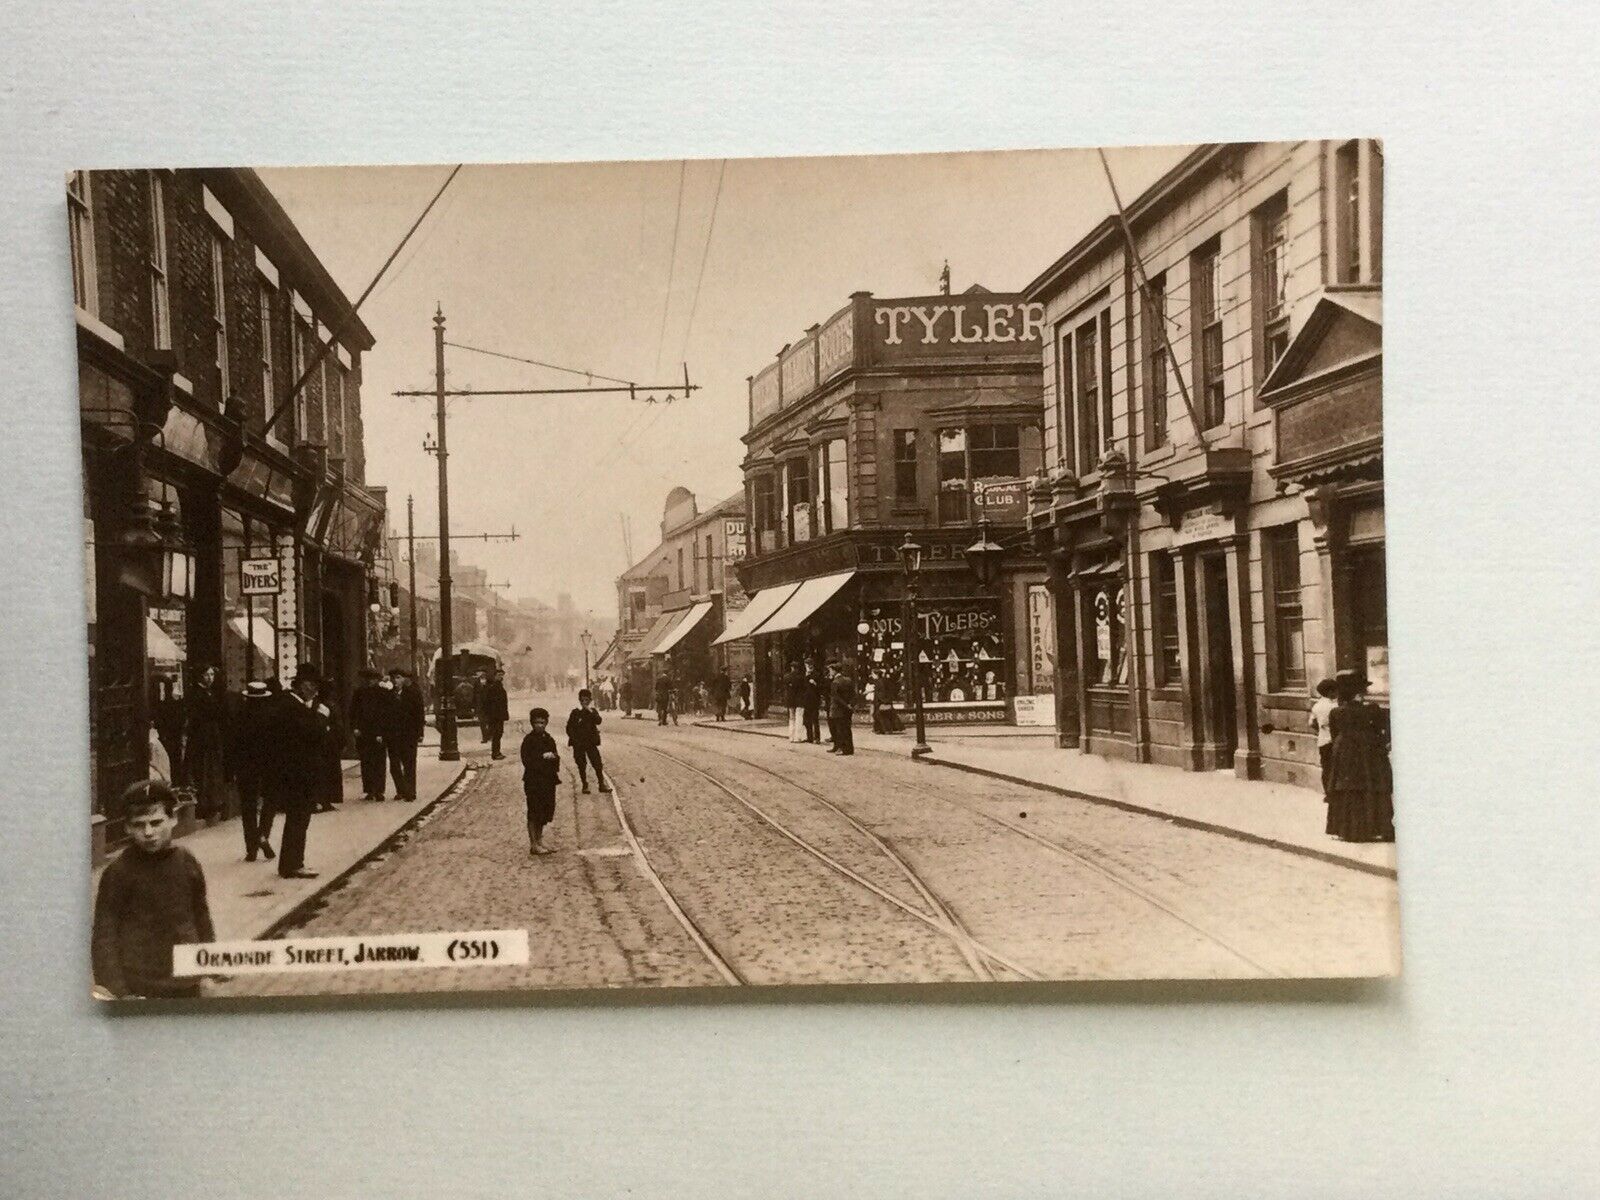 House Clearance - Jarrow Ormonde Street near Newcastle upon Tyne RP PM Jarrow 1912 R Johnston L